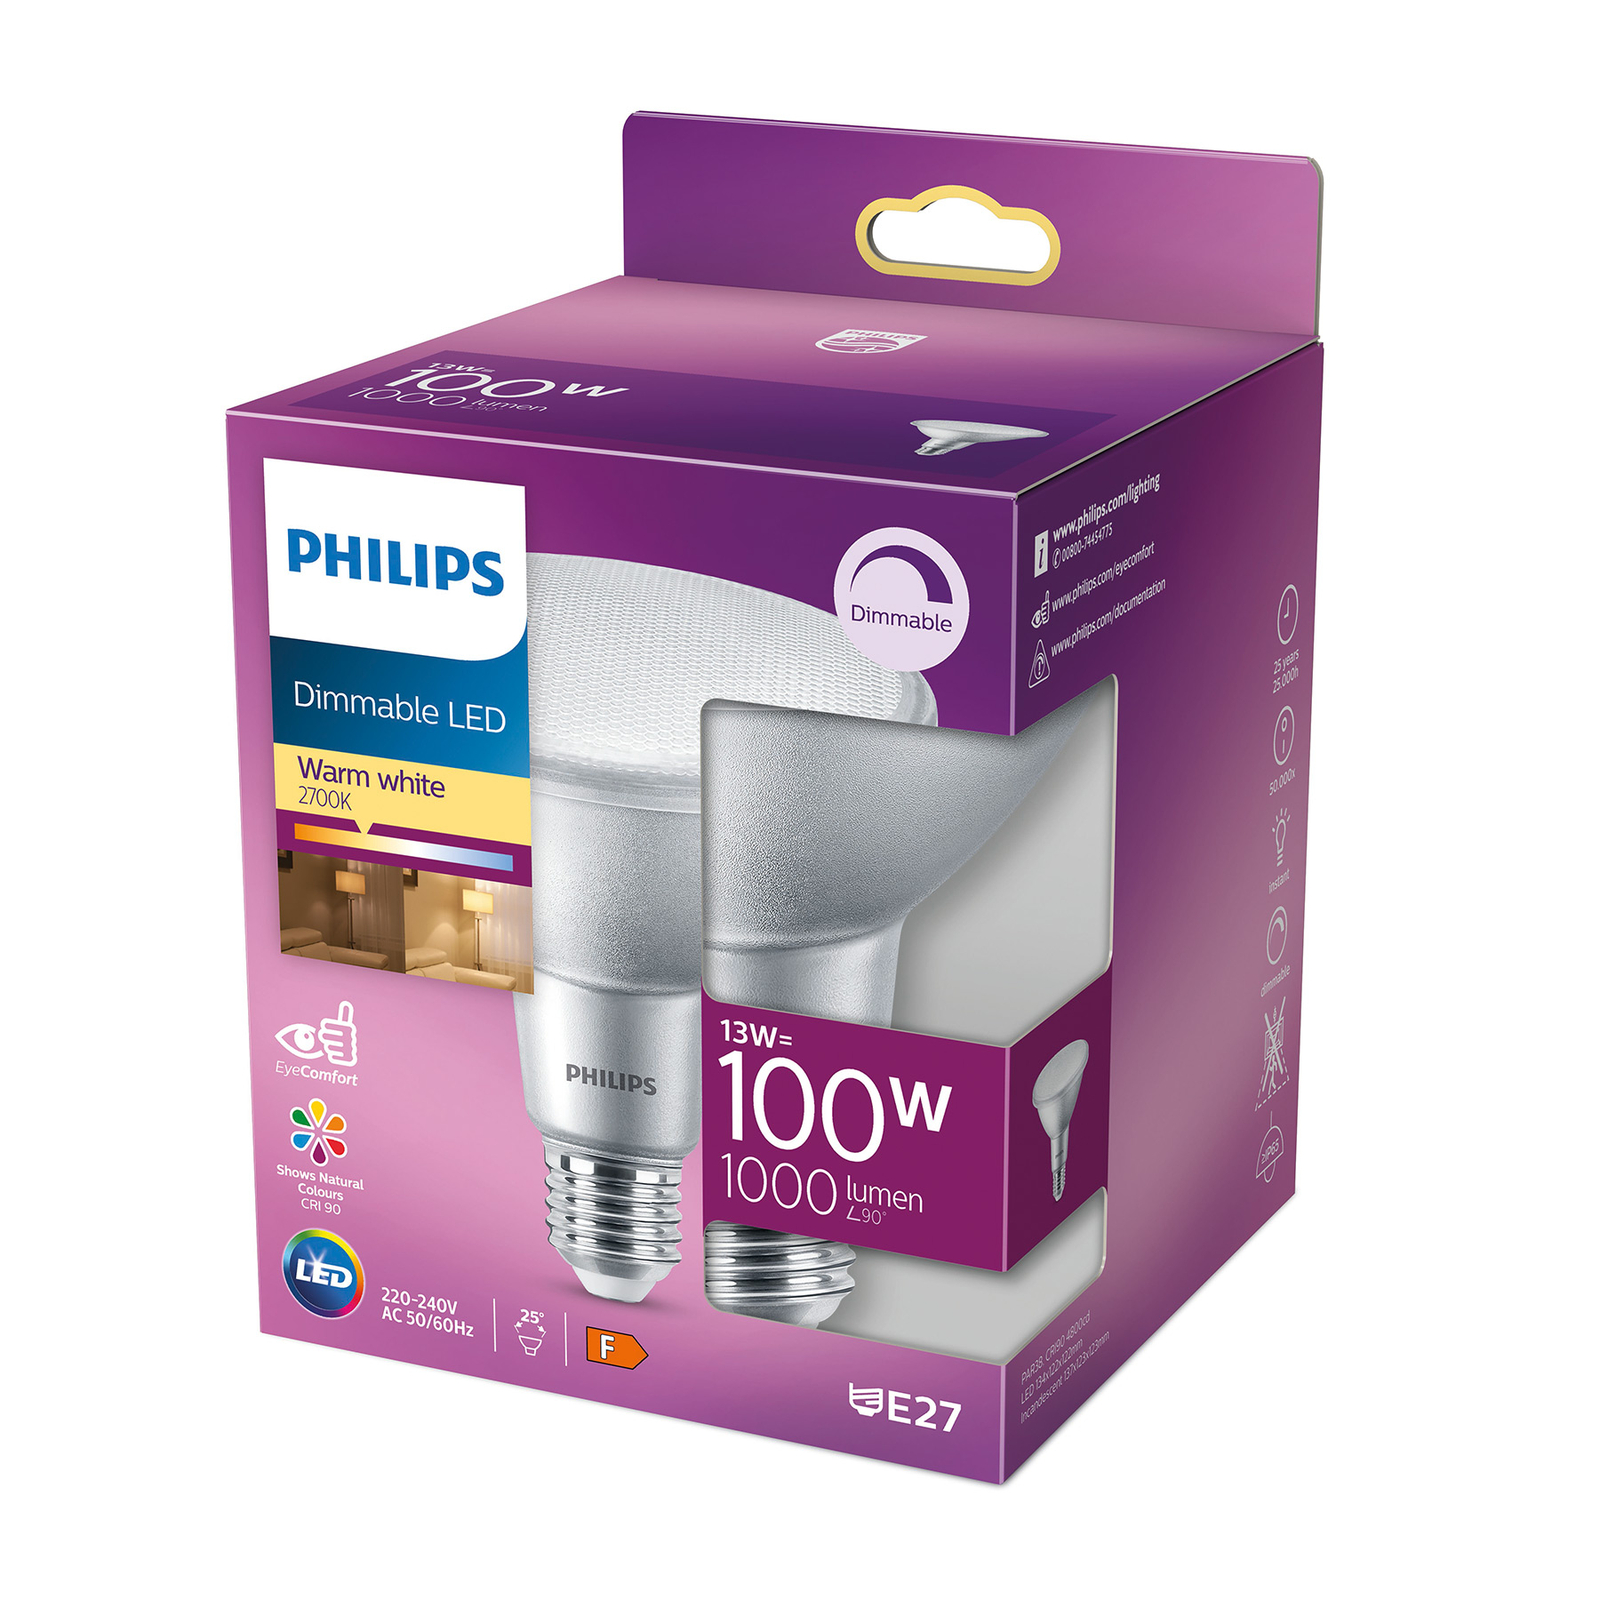 Philips reflector LED bulb E27 PAR38 13 W 827 dim